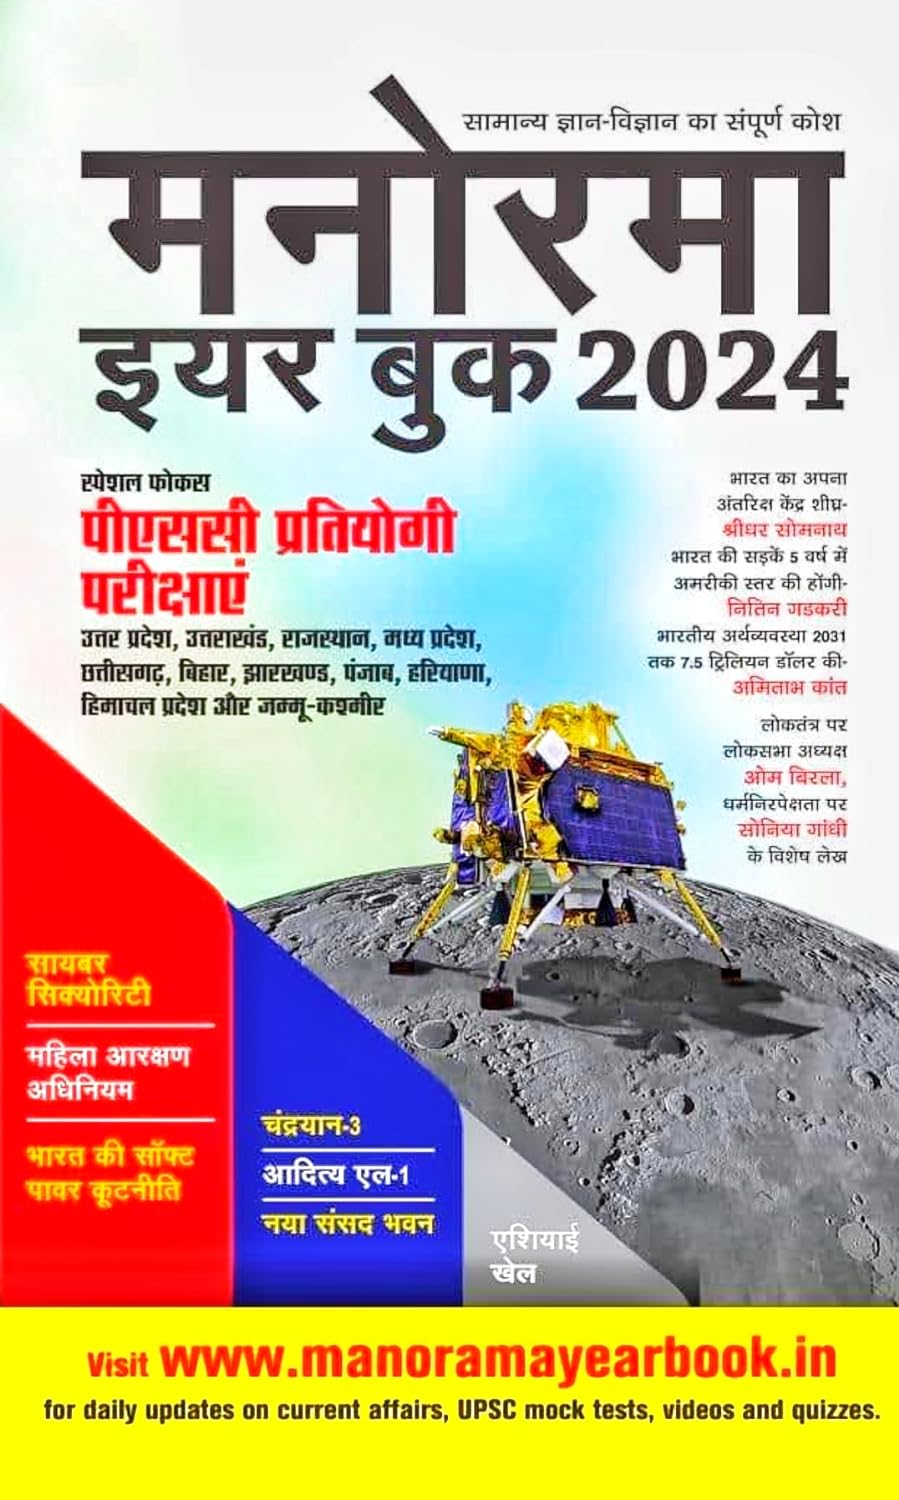 Manorama Year Book 2024 Hindi Edition